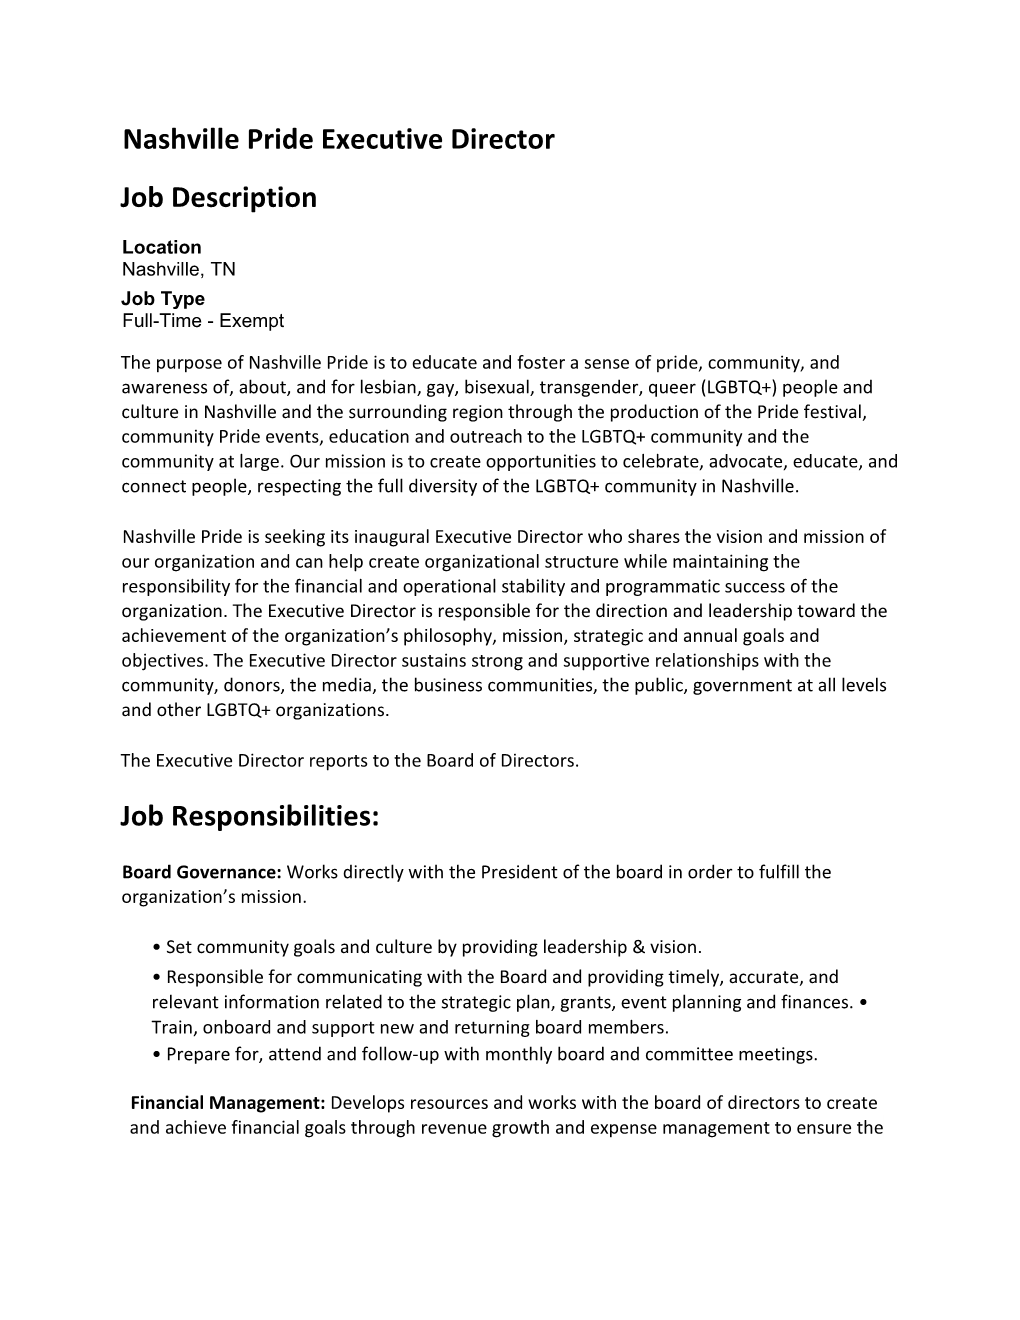 Nashville Pride Executive Director Job Description Job